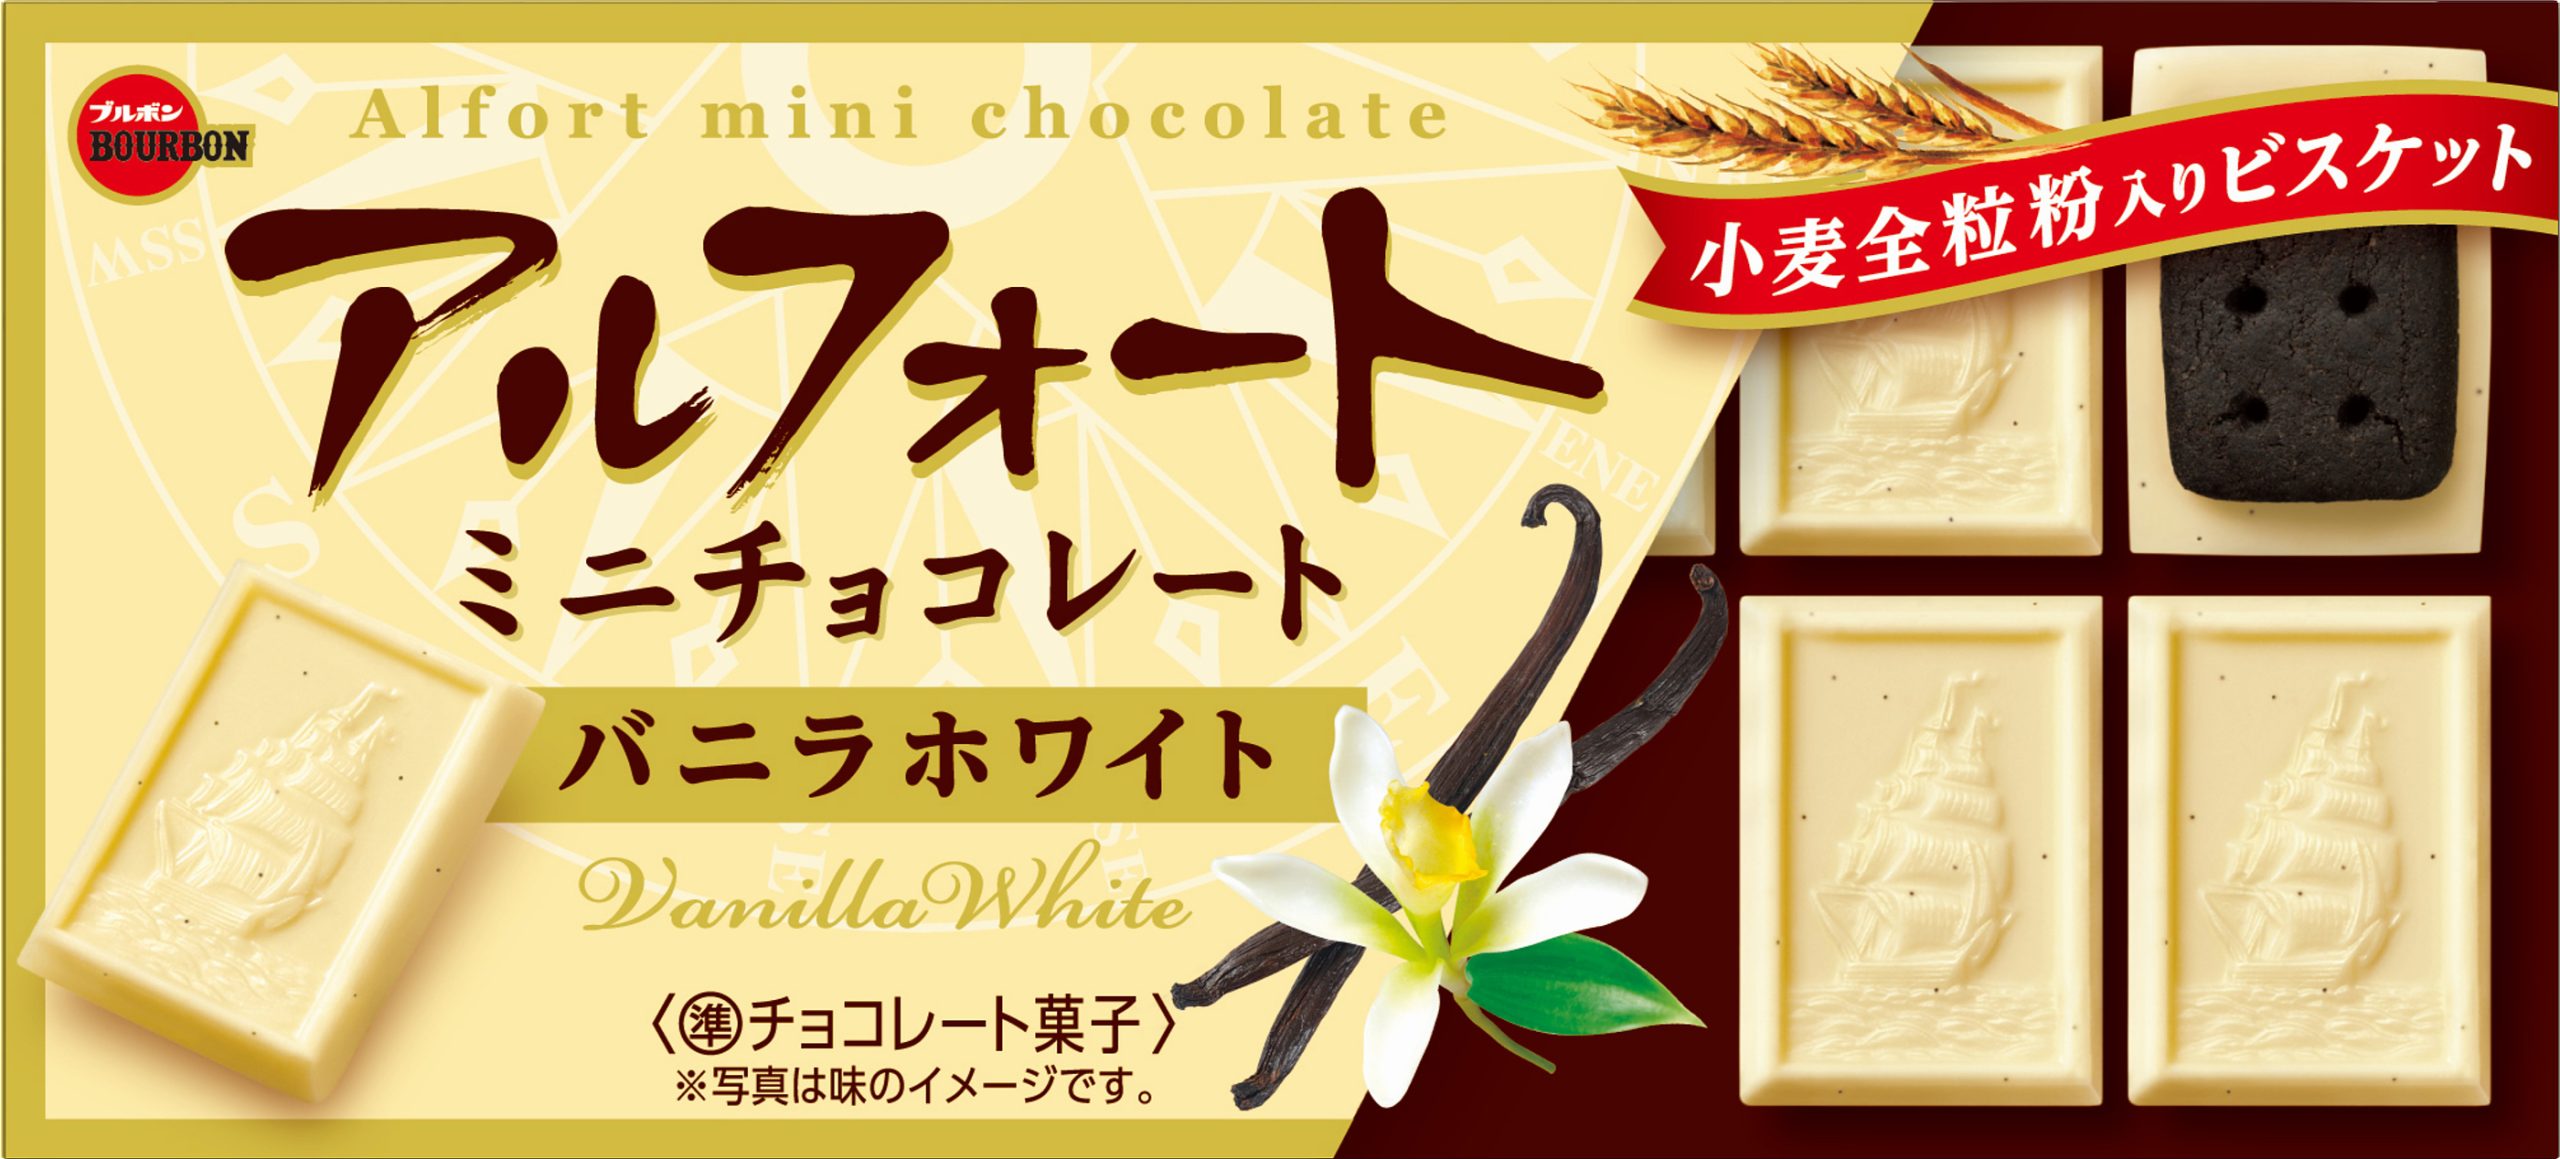 alfort mini chocolate vanilla white